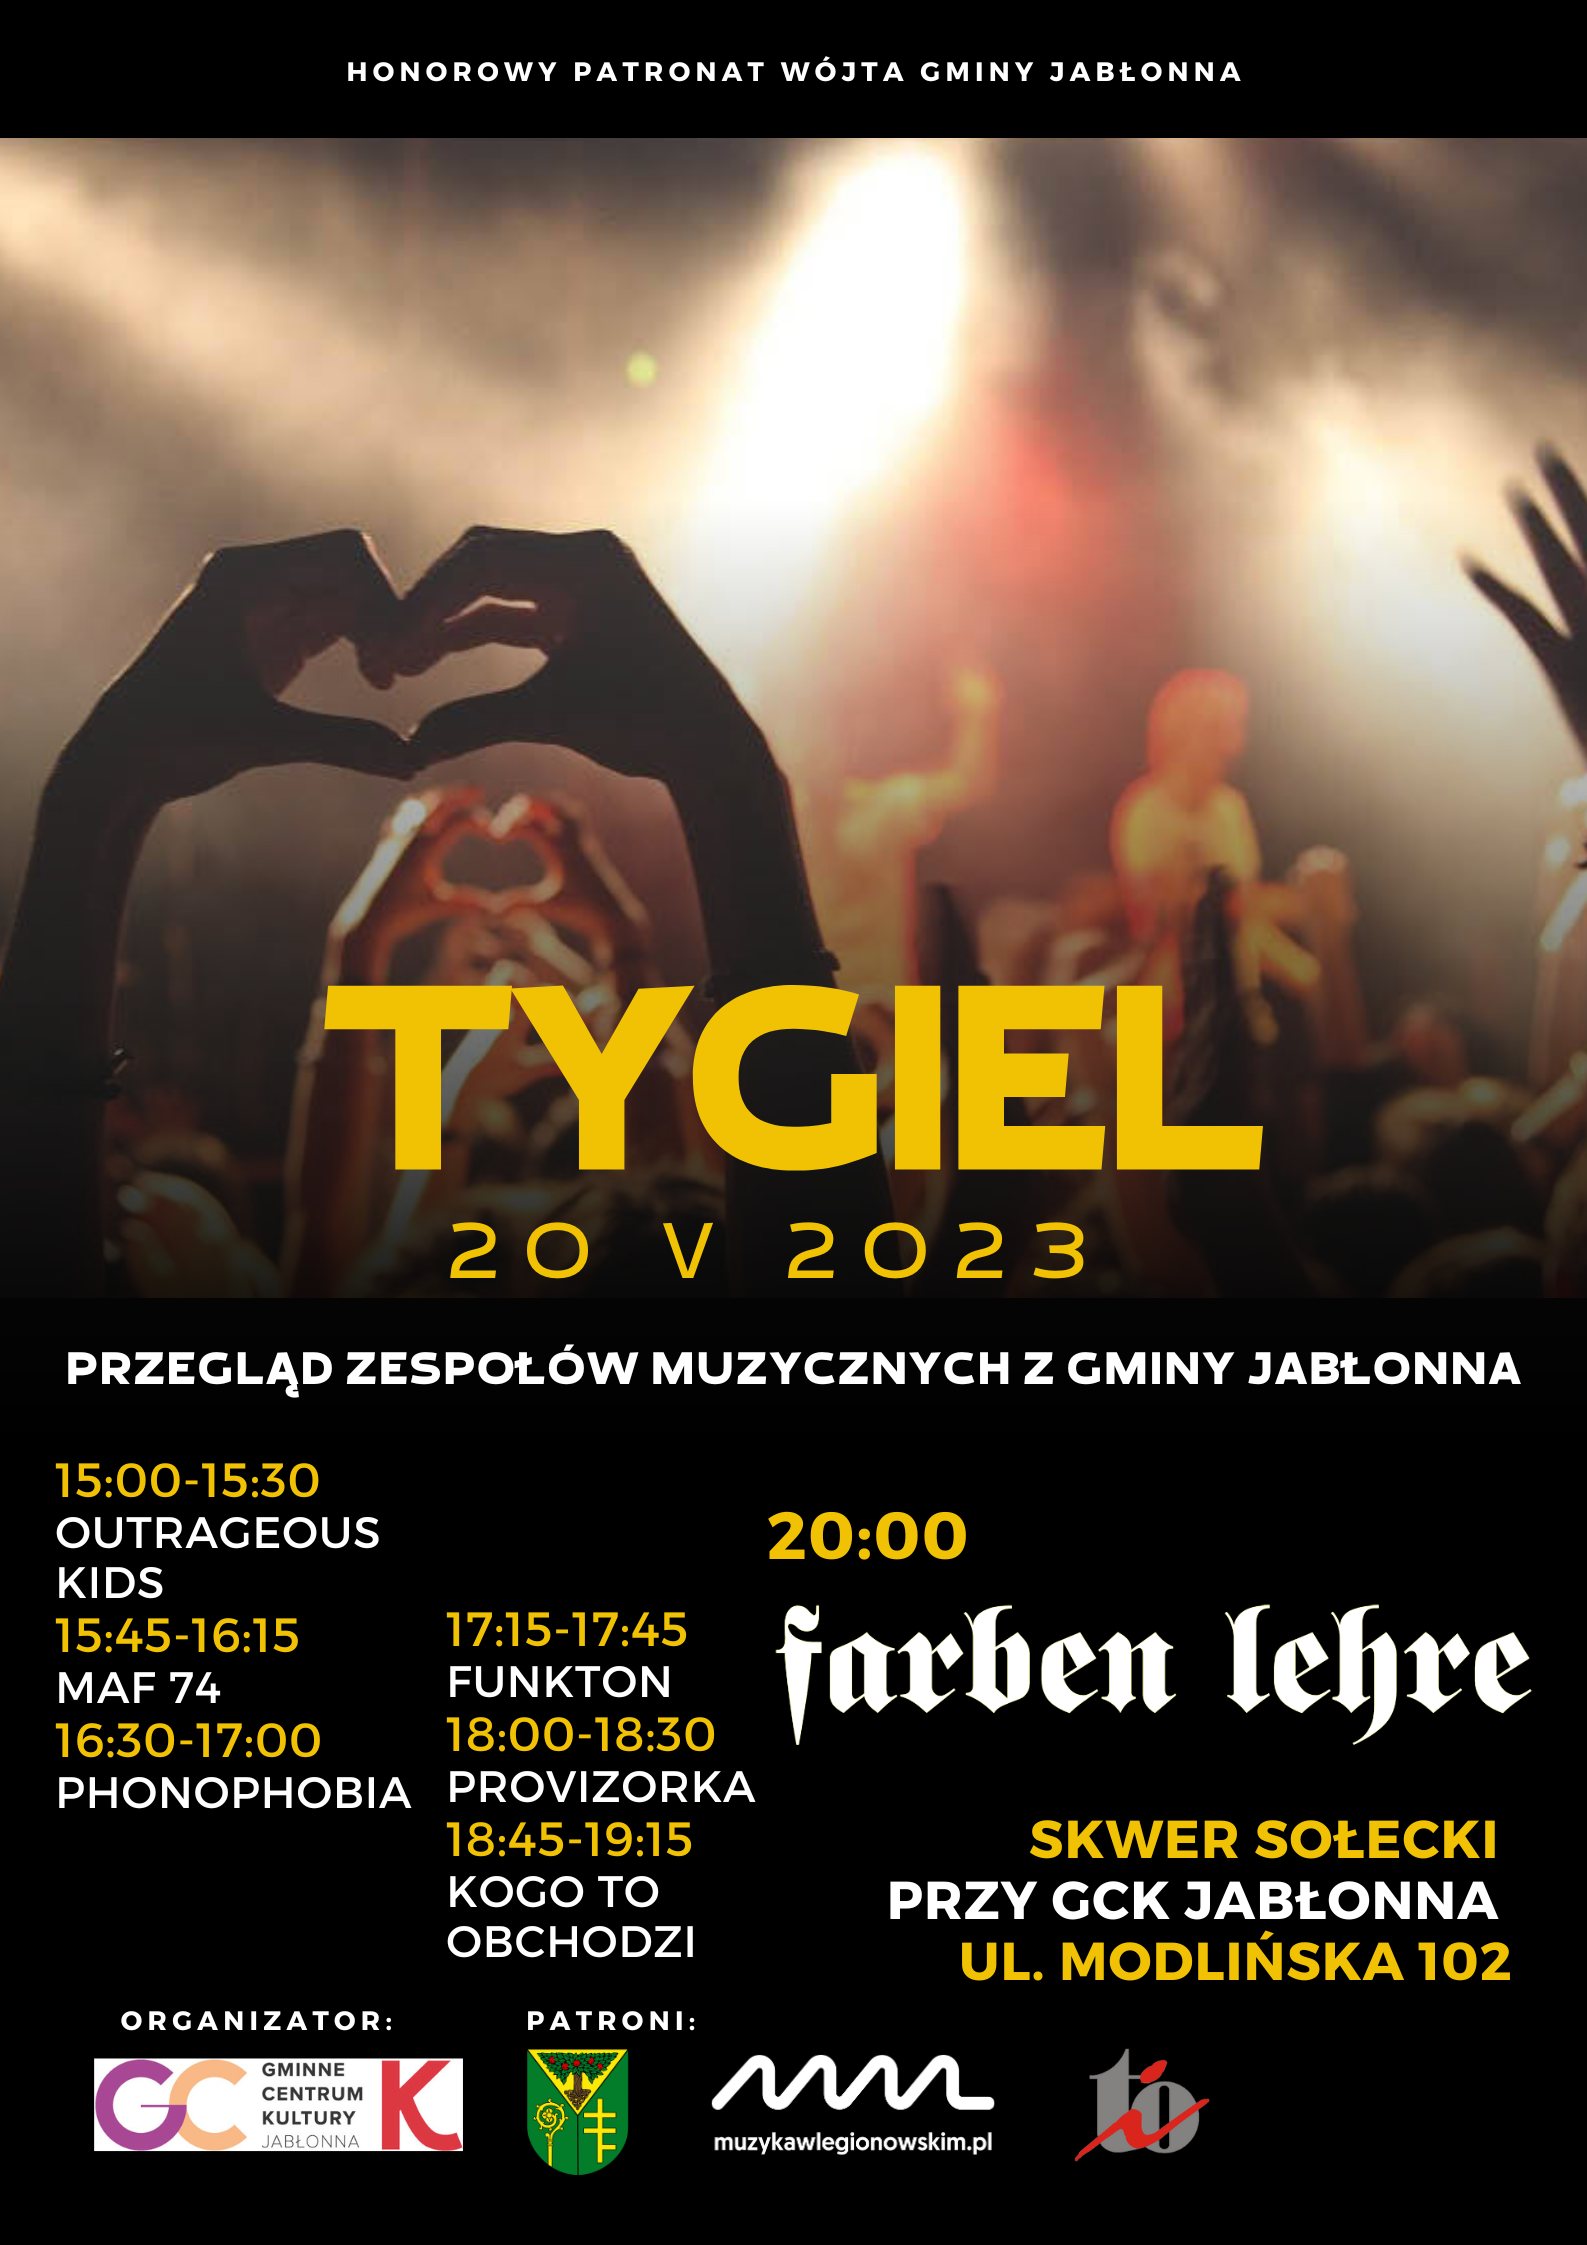 TYGIEL.png (1.20 MB)